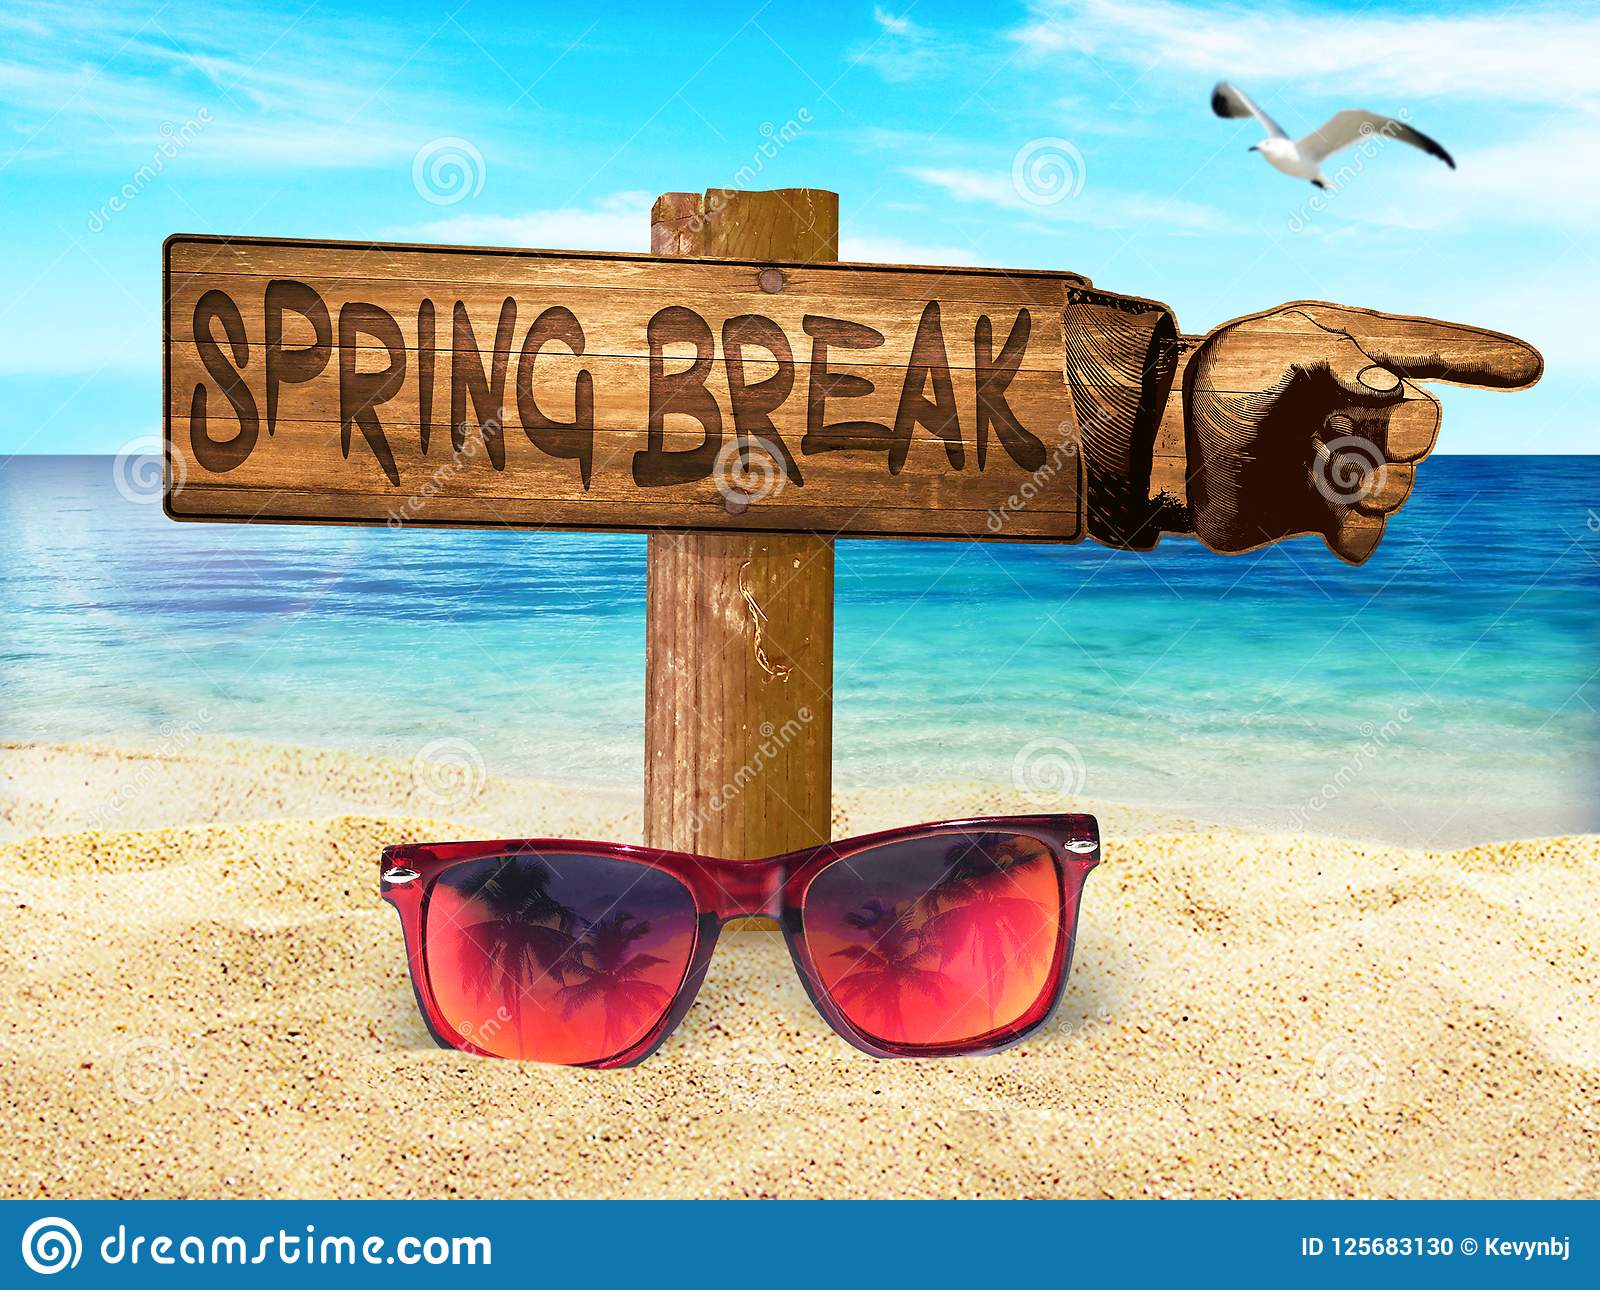 spring-break-beach-sign-sunglasses-sand-sun-fun-sky-party-school-vacation-swimsuit-bikini-125683130-1